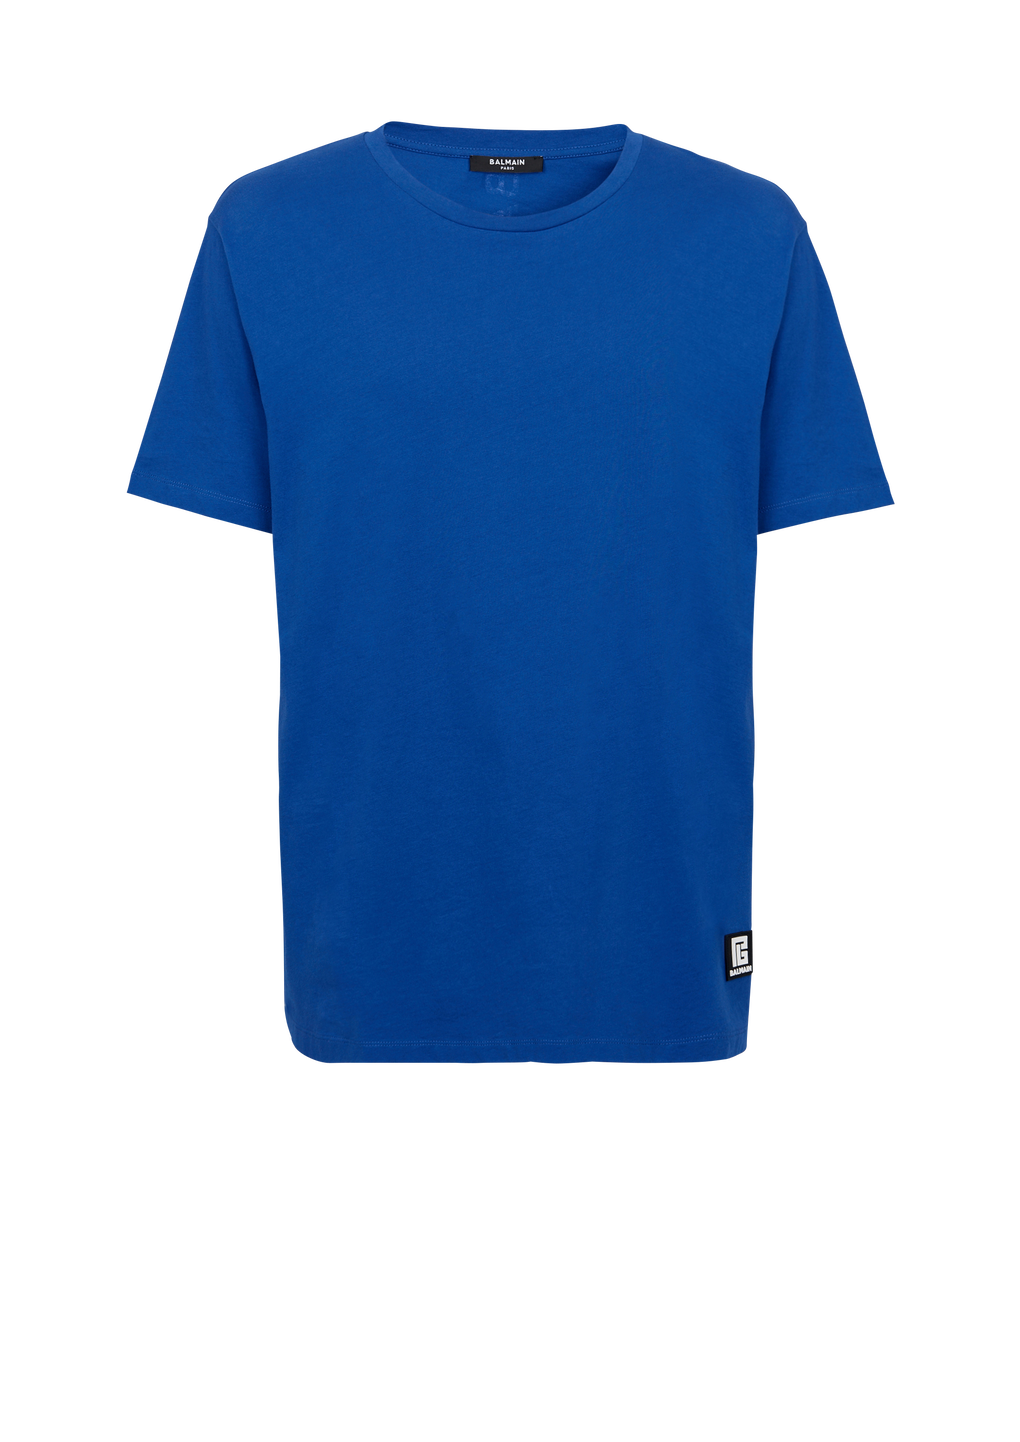 T-shirt oversize en coton imprimé logo Balmain, bleu marine, hi-res